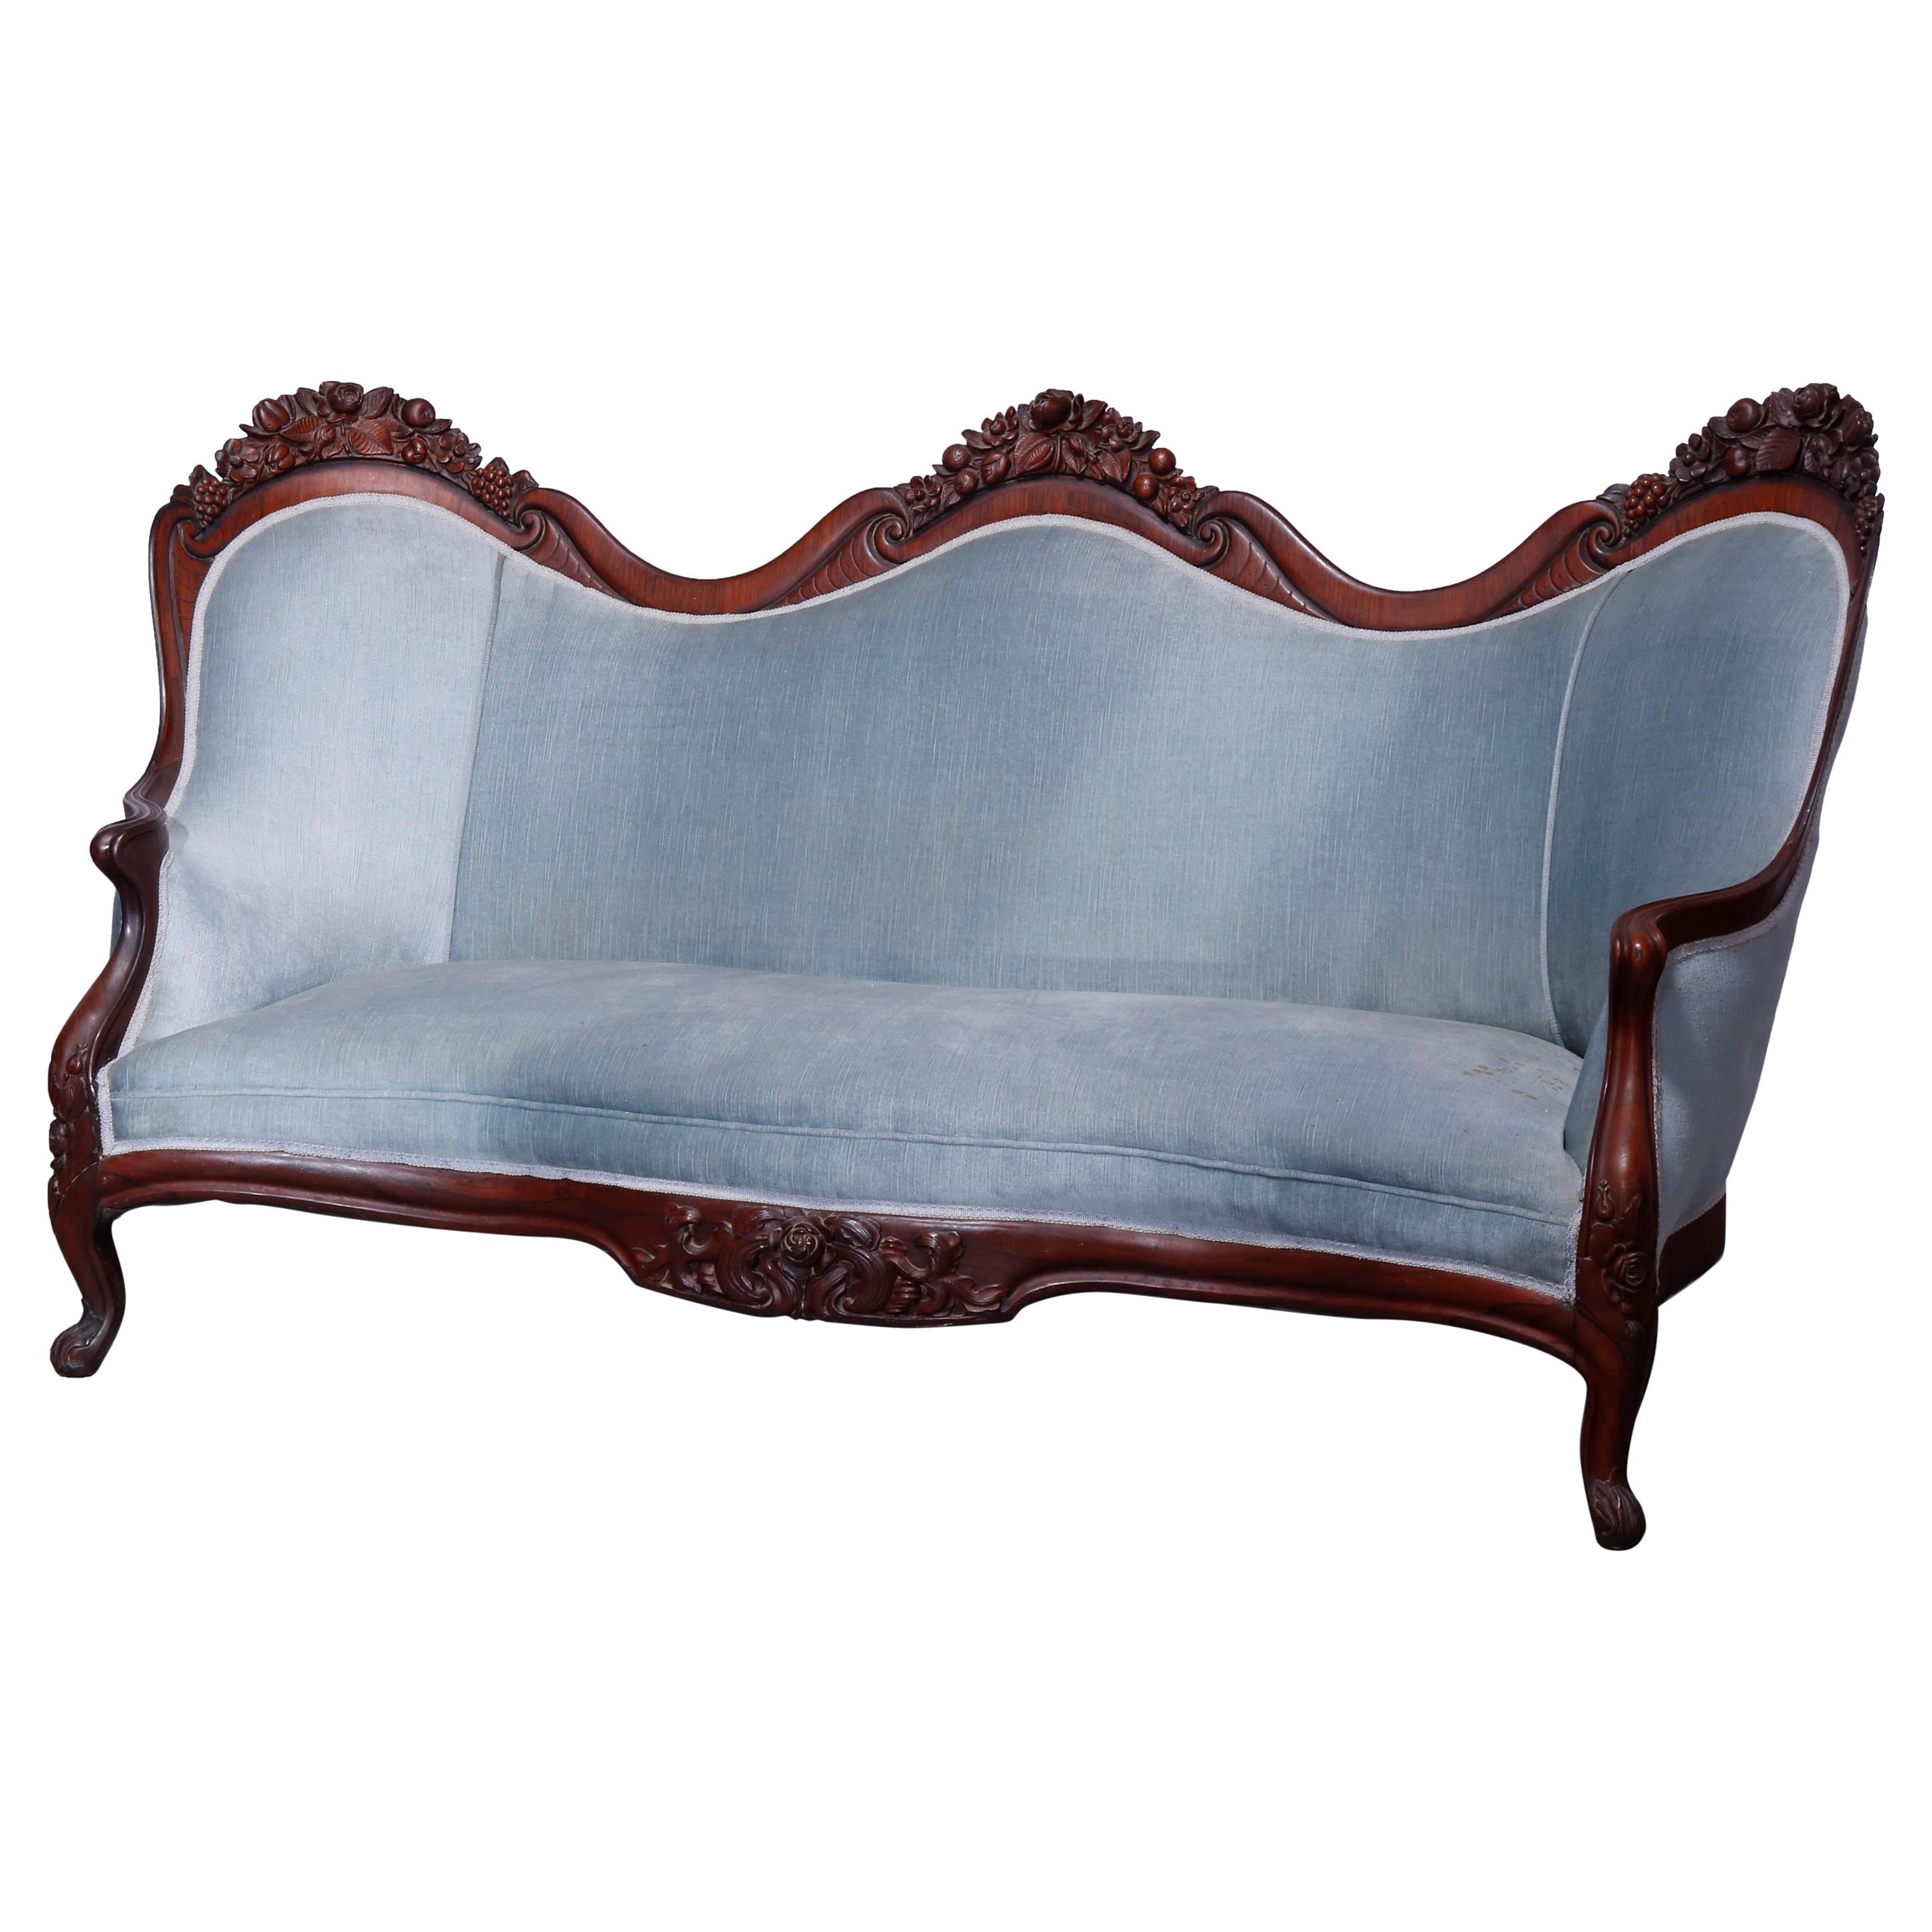 Antique Rococo Revival Belter Rosalie Laminated Rosewood Settee Sofa, c1860